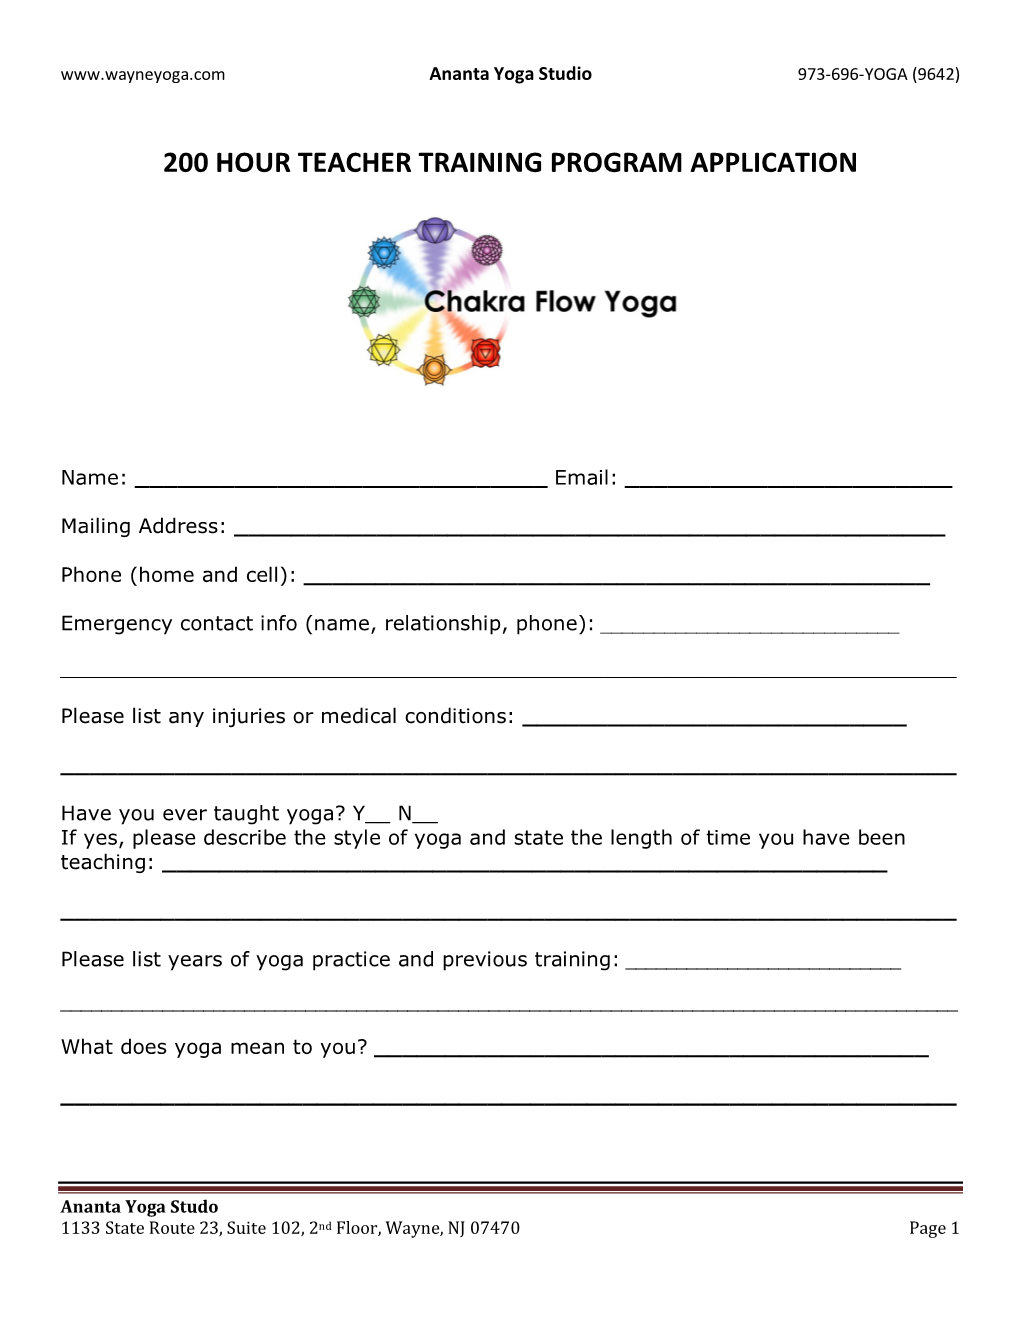 200 Hour Teacher Training Program Application